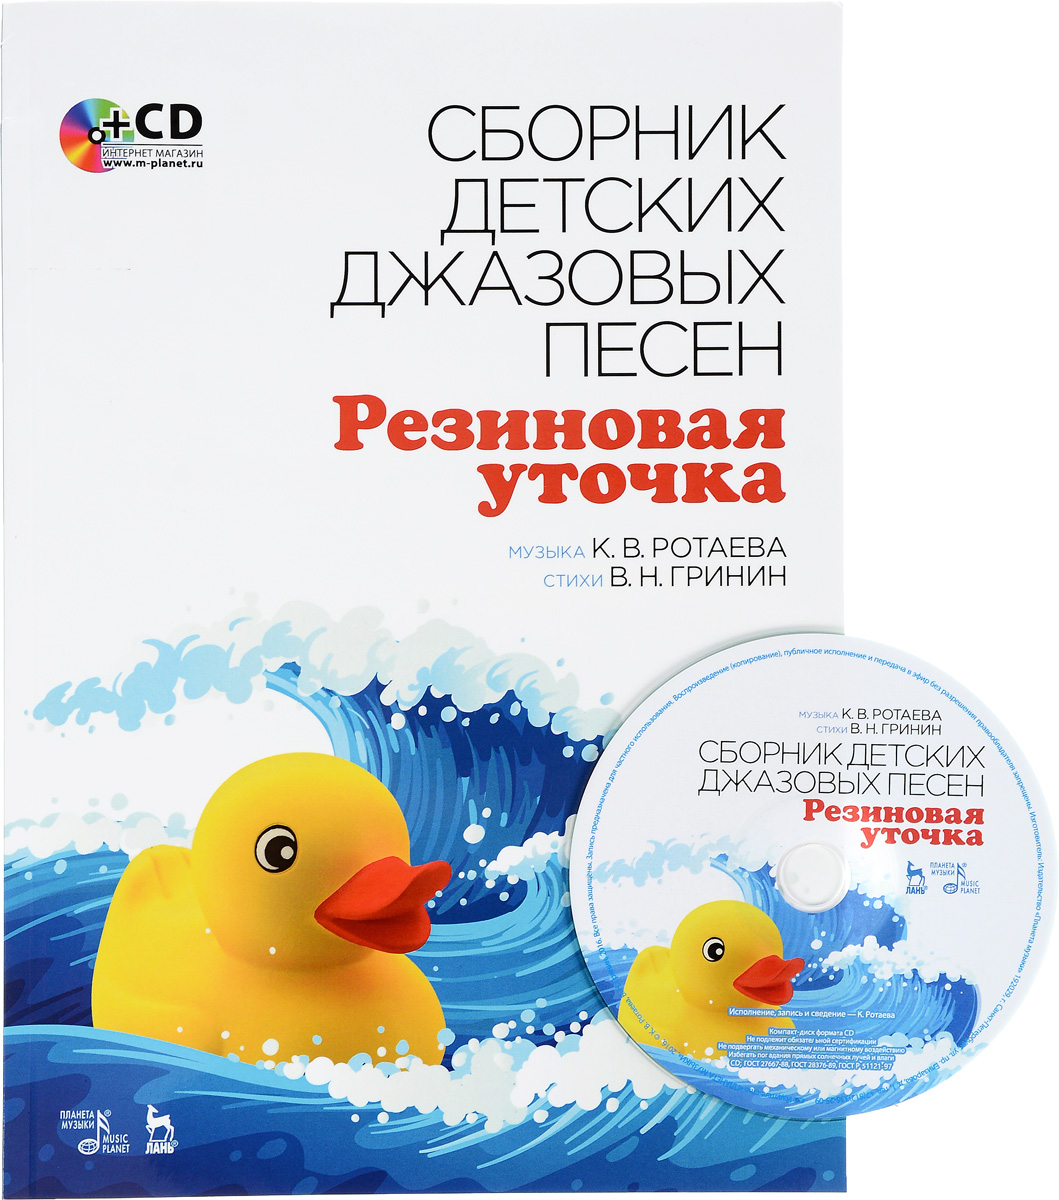 Collection of Children’s Jazz Songs "Rubber Duck" : Textbook / Сборник детских джазовых песен "Резиновая уточка" (+ CD)